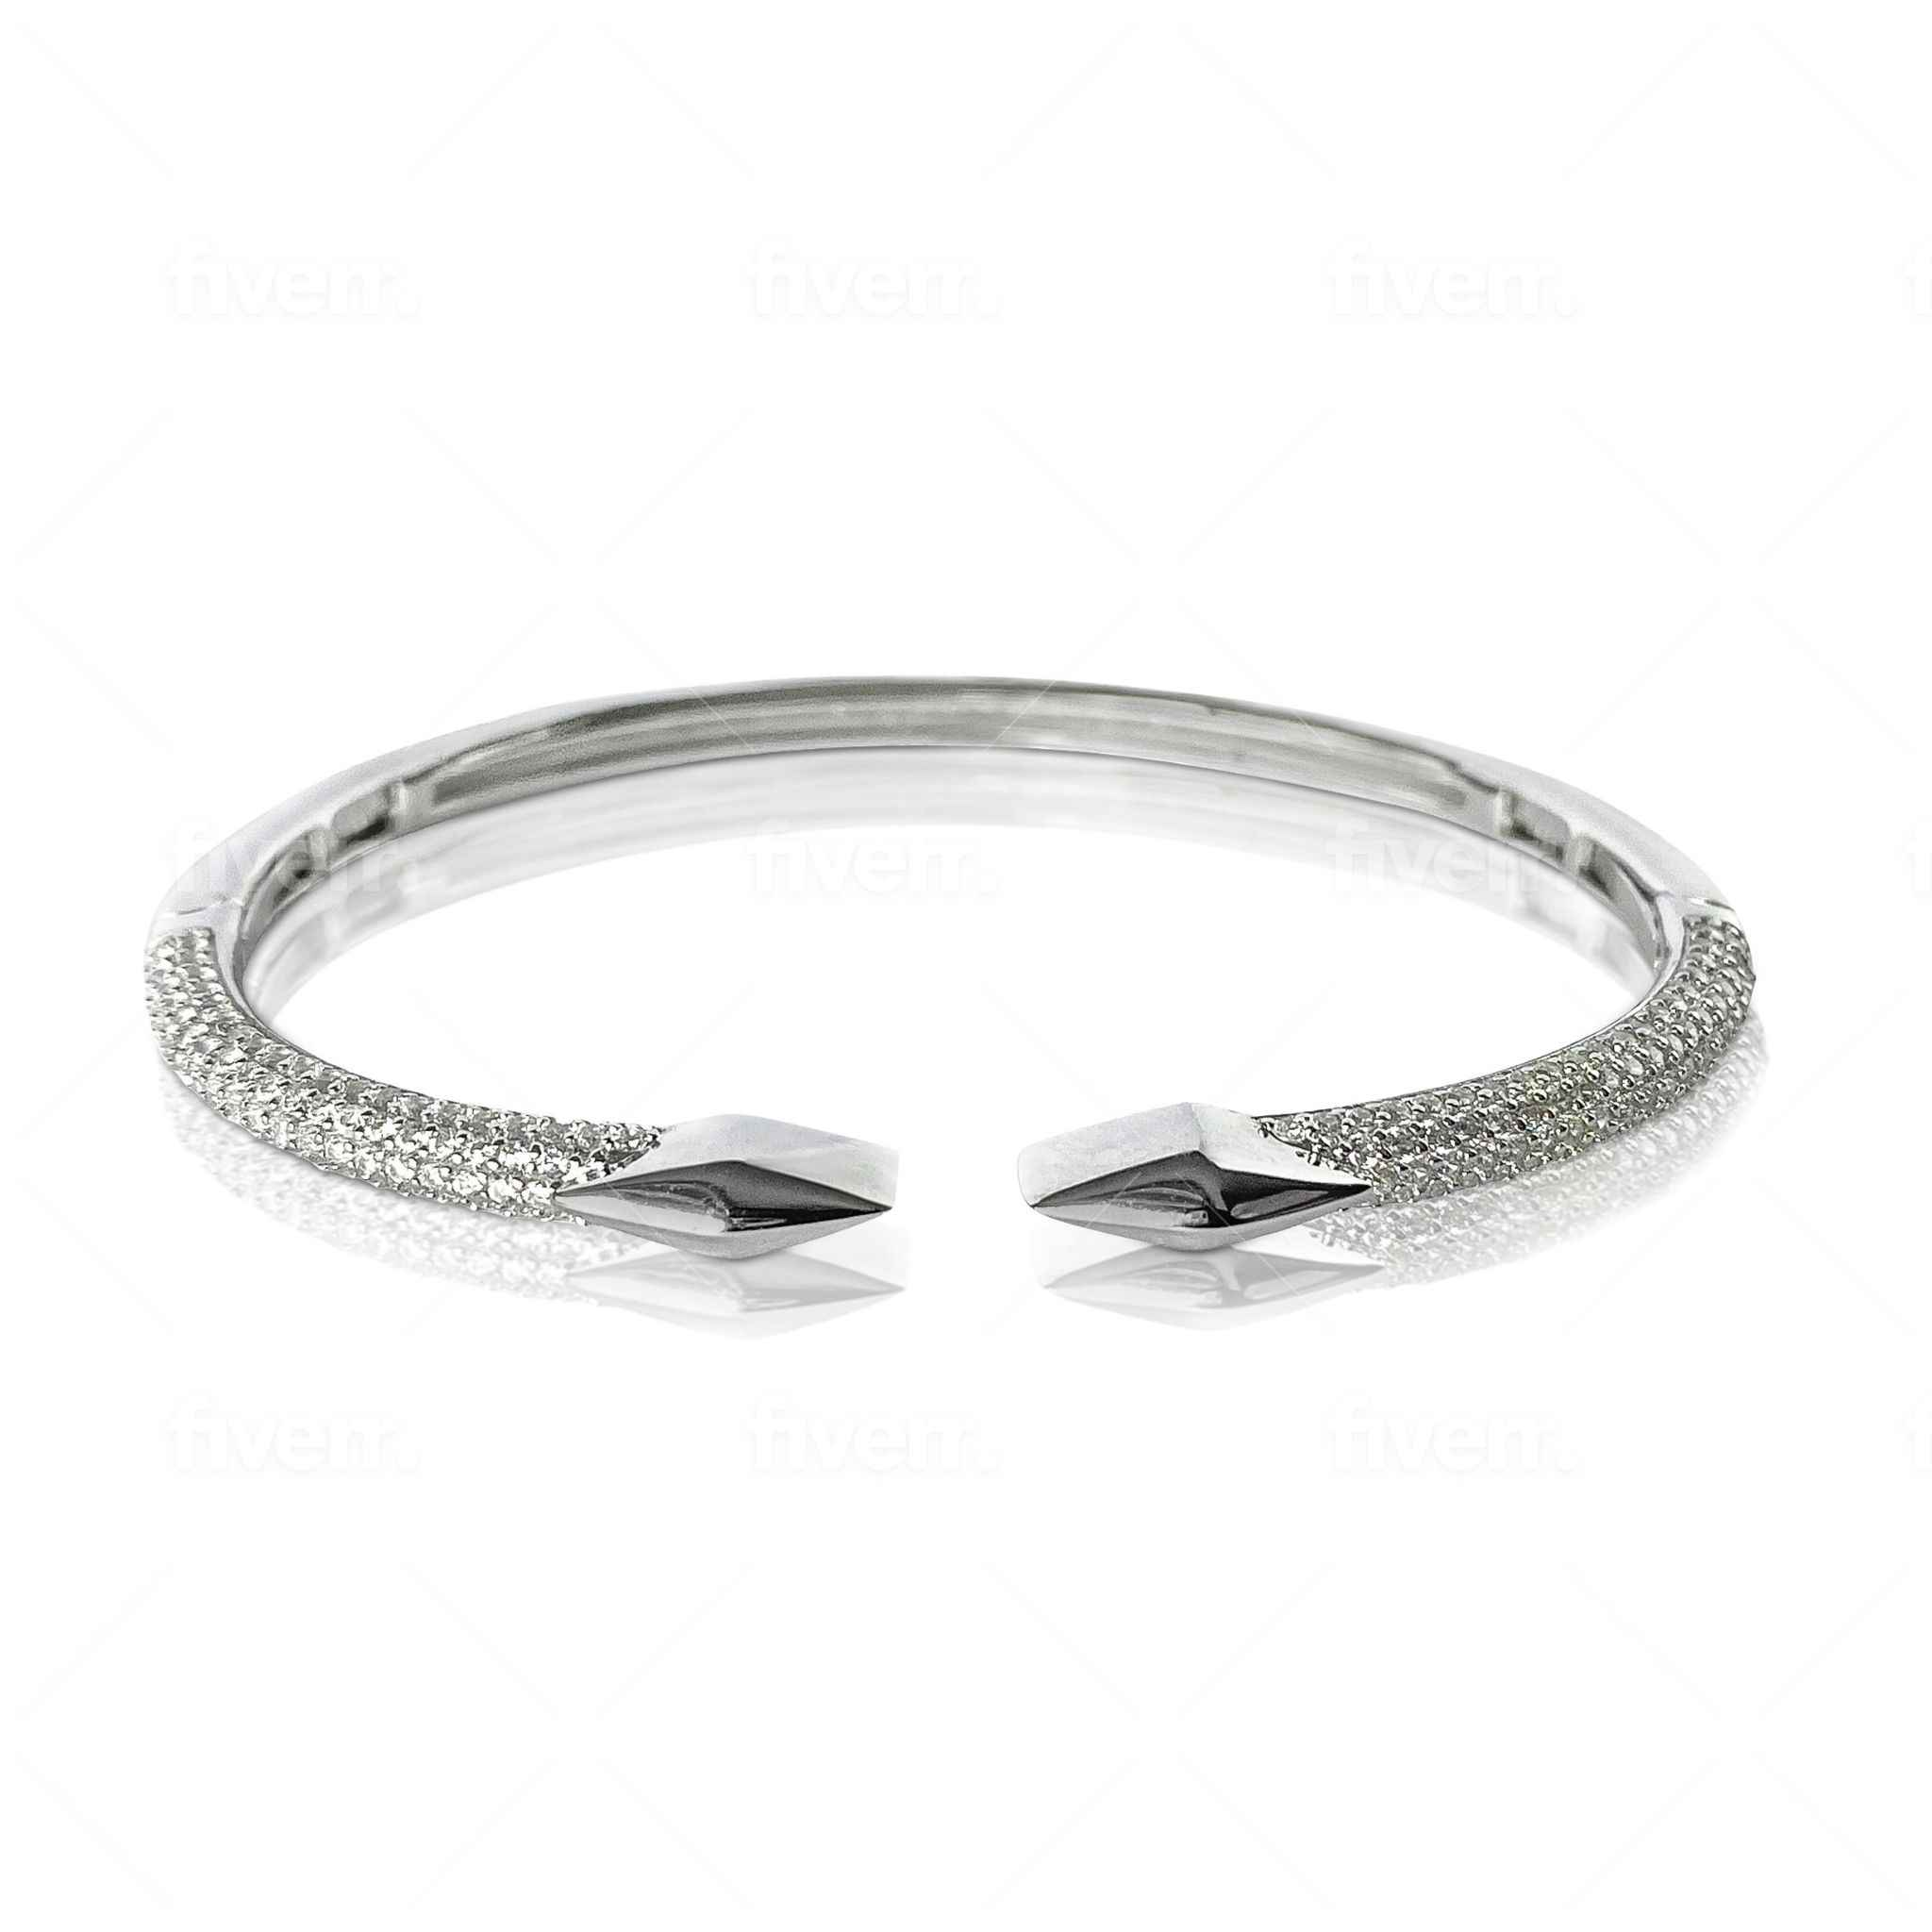 Double Link Bracelet in silver against plain white background.